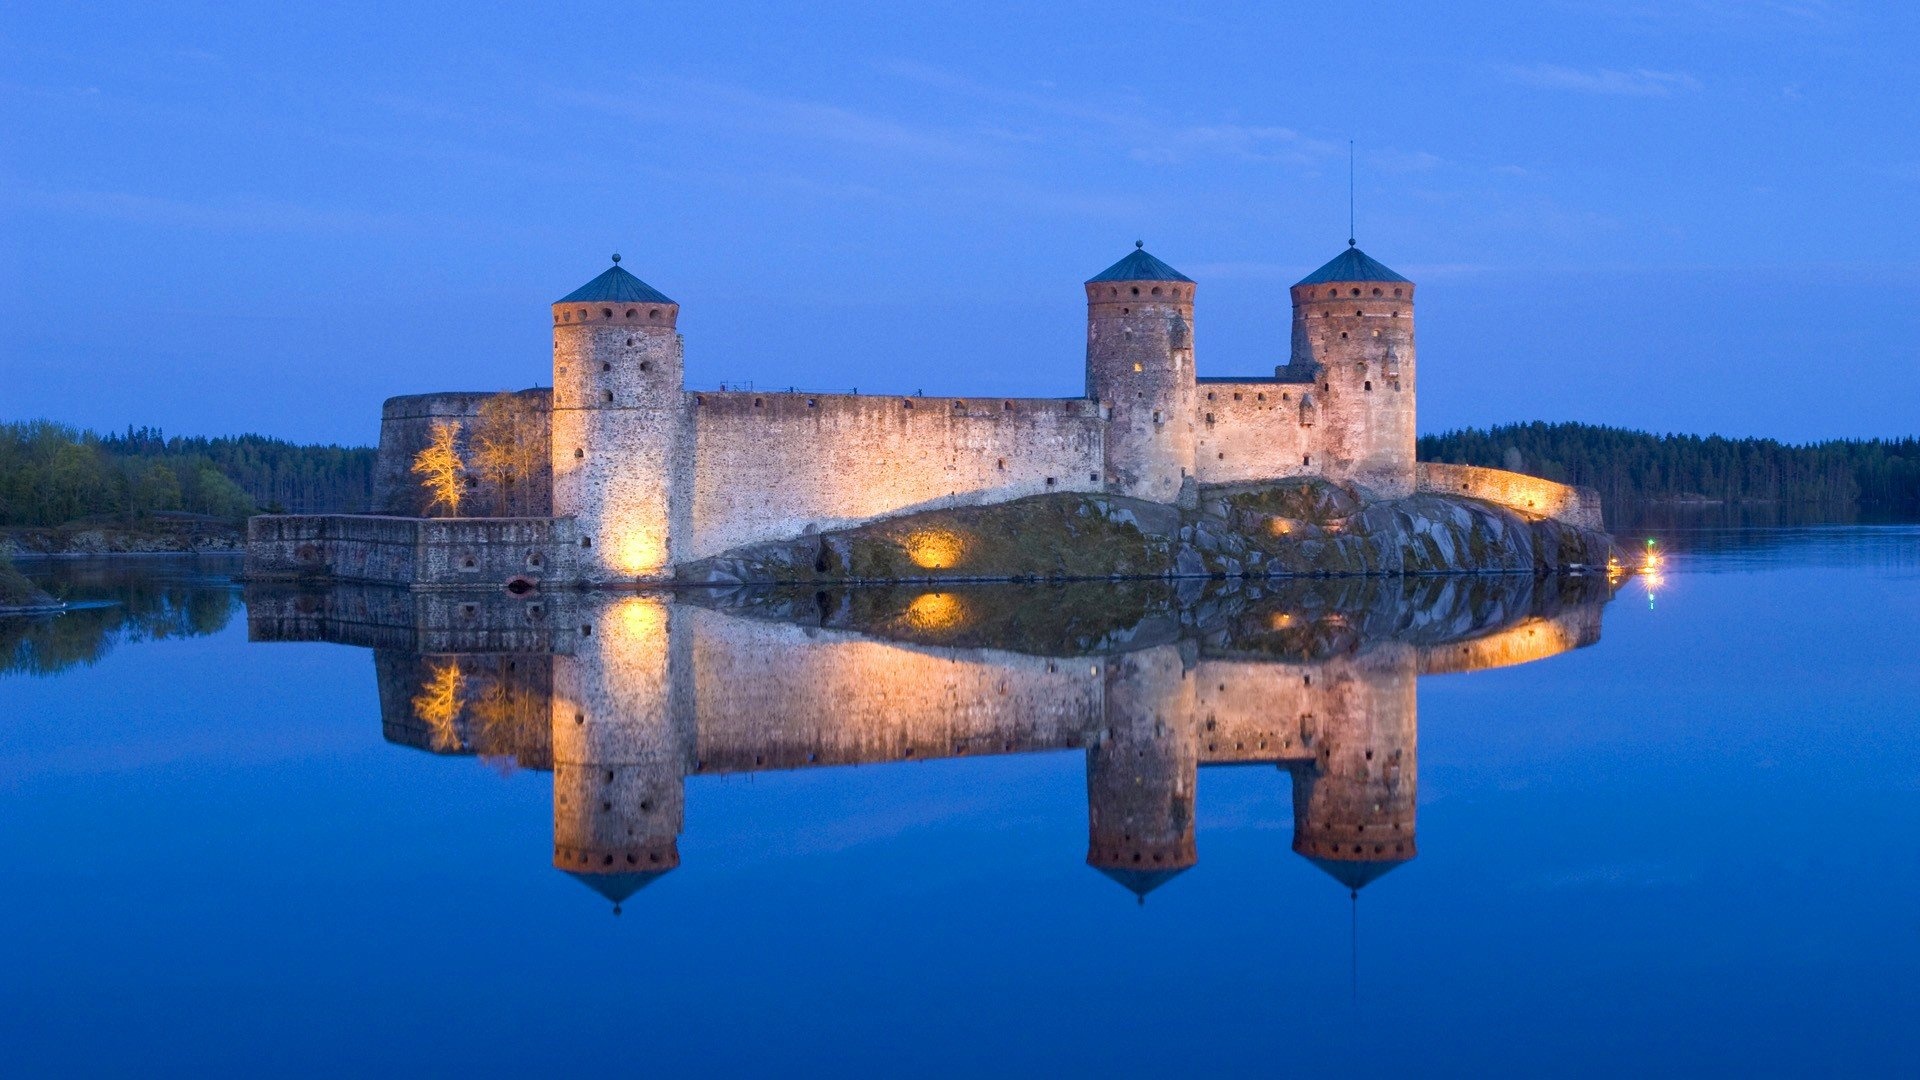 Finland: Olavinlinna, A 15th-century three-tower castle located in Savonlinna. 1920x1080 Full HD Background.